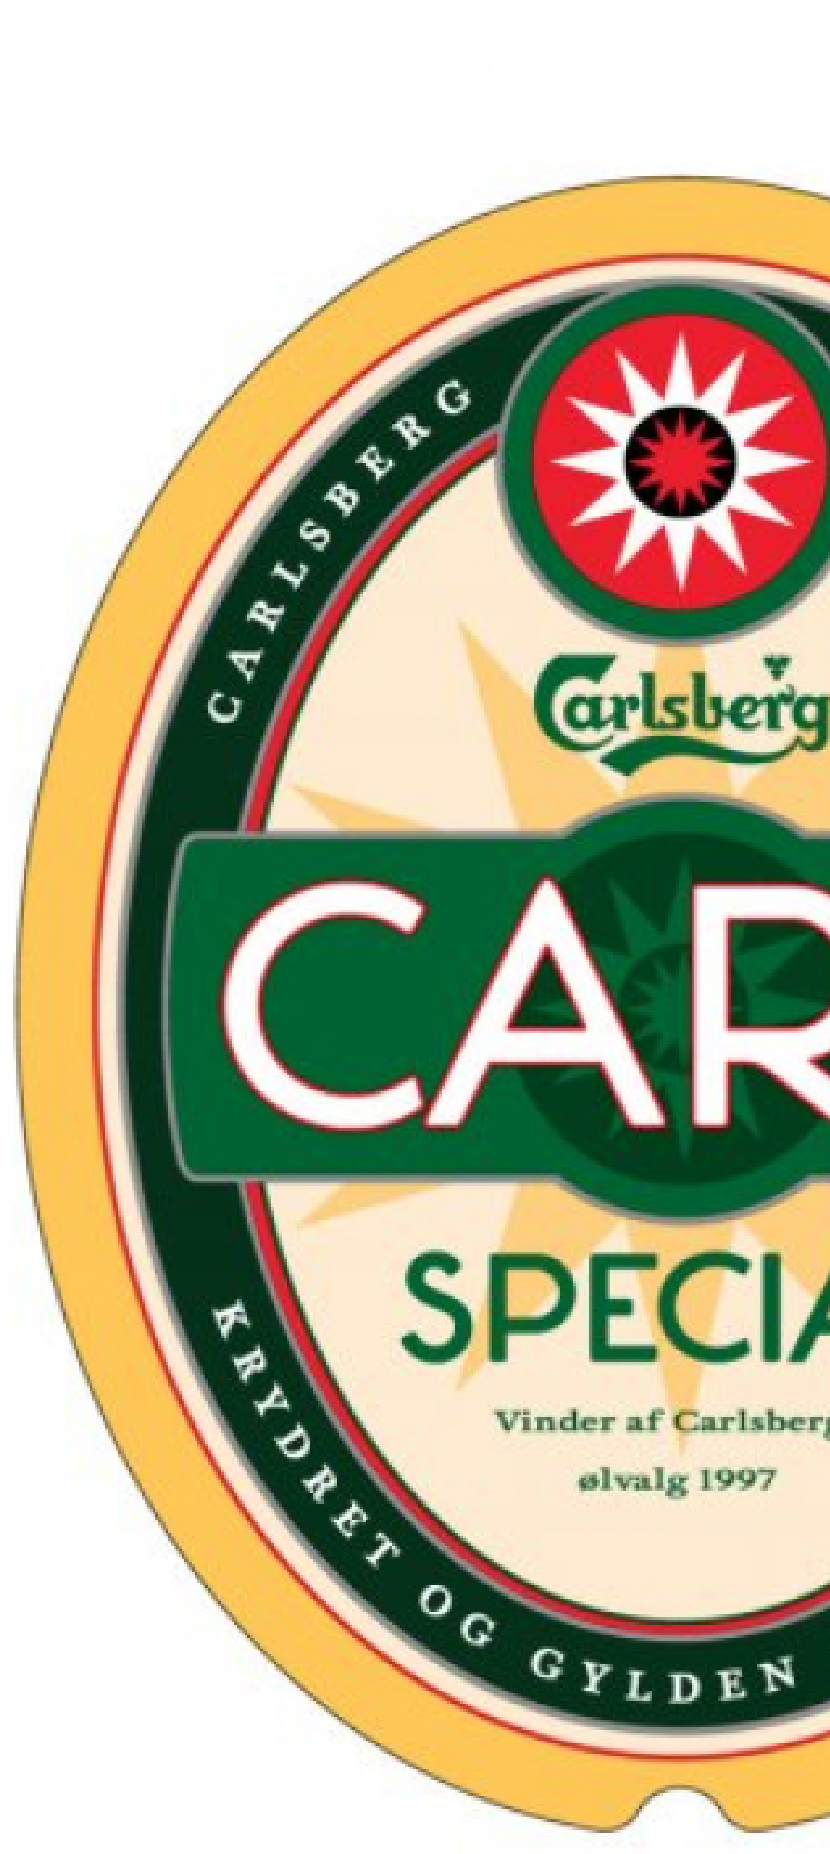 Carls special